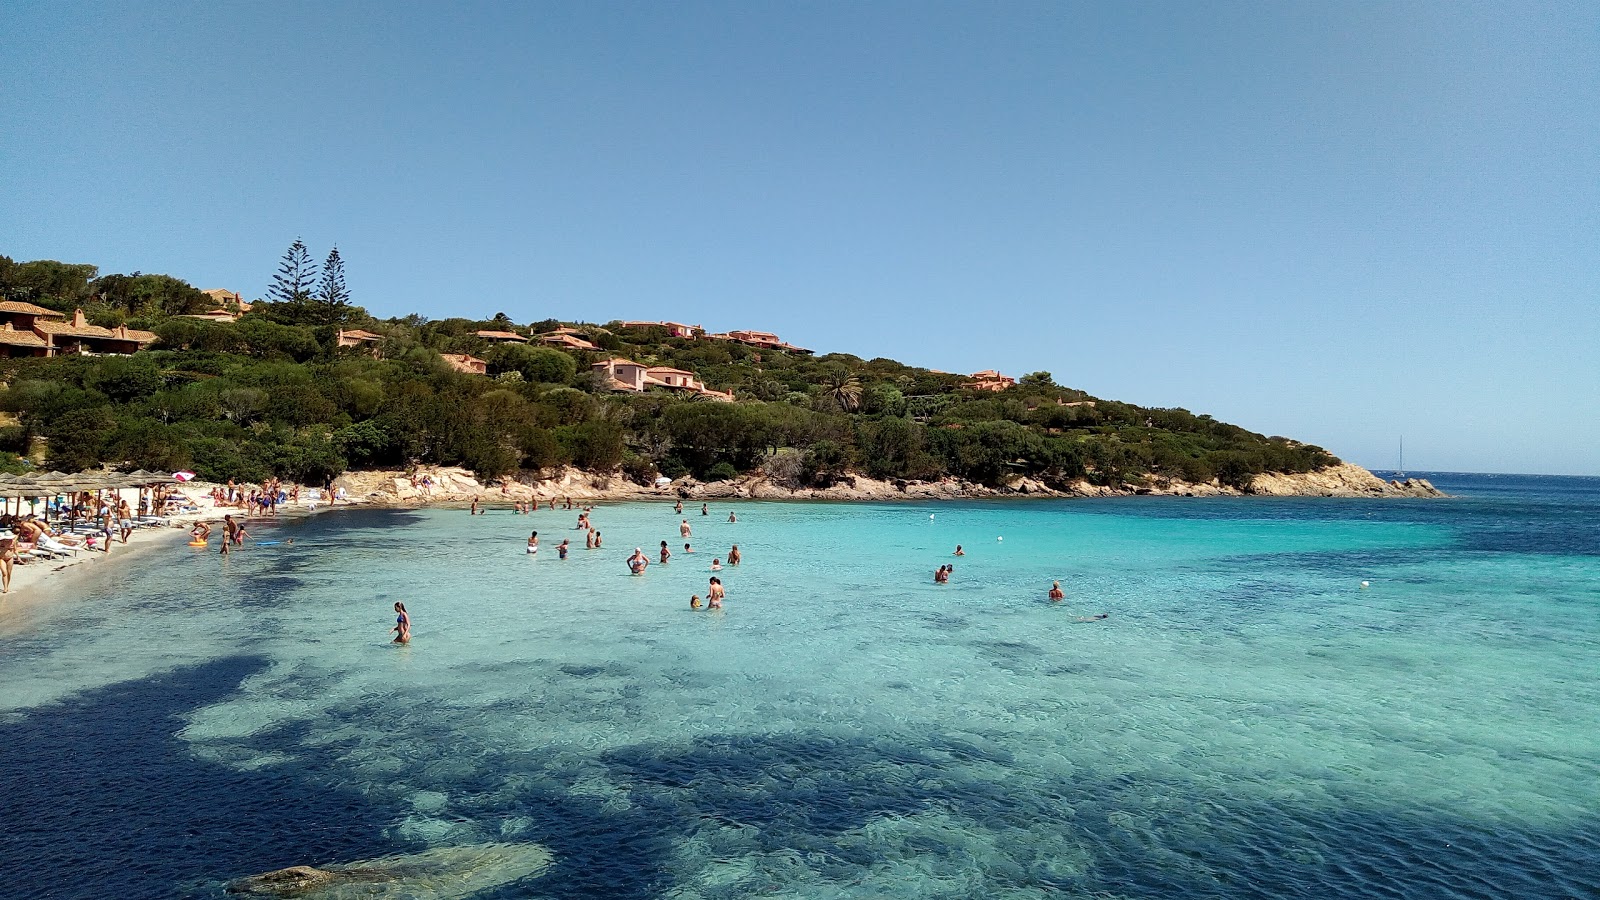 Photo of Spiaggia Cala Granu with white sand surface